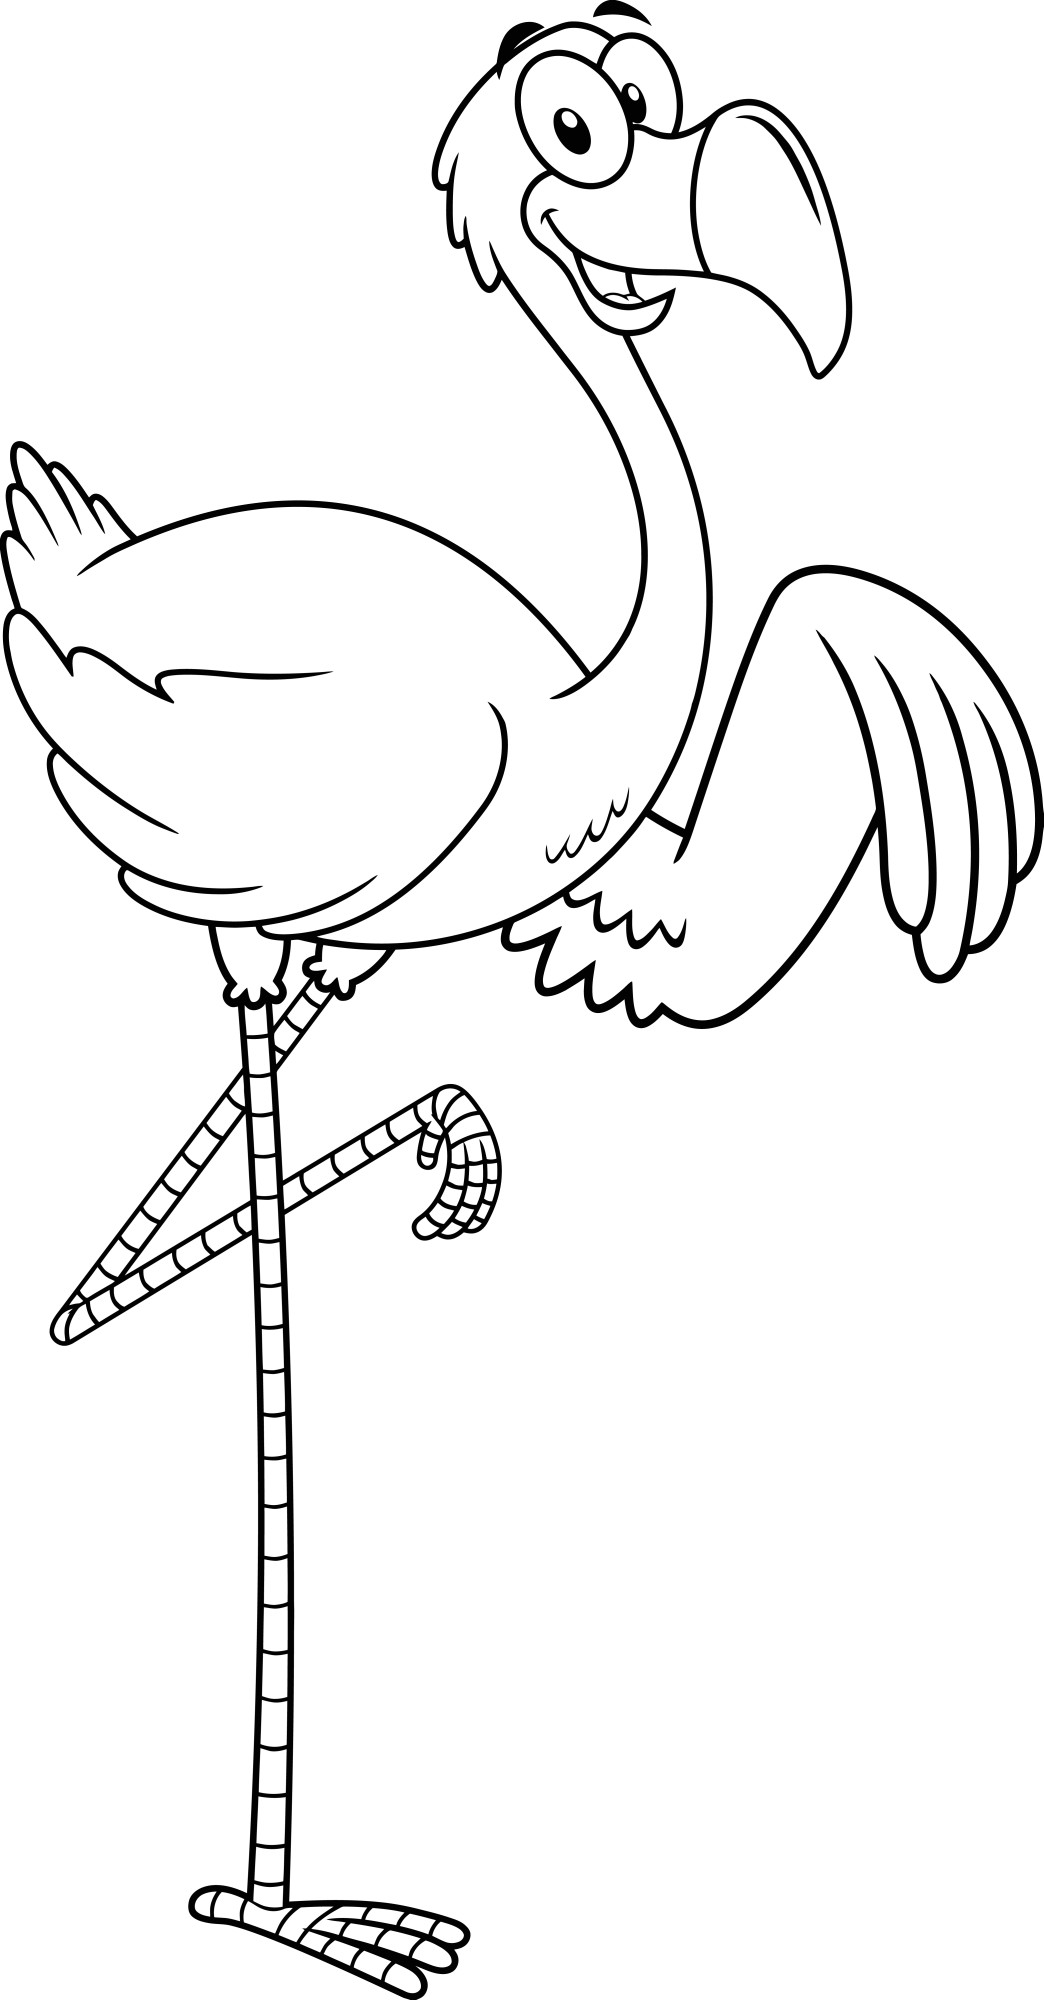 Раскраска для детей: птица фламинго